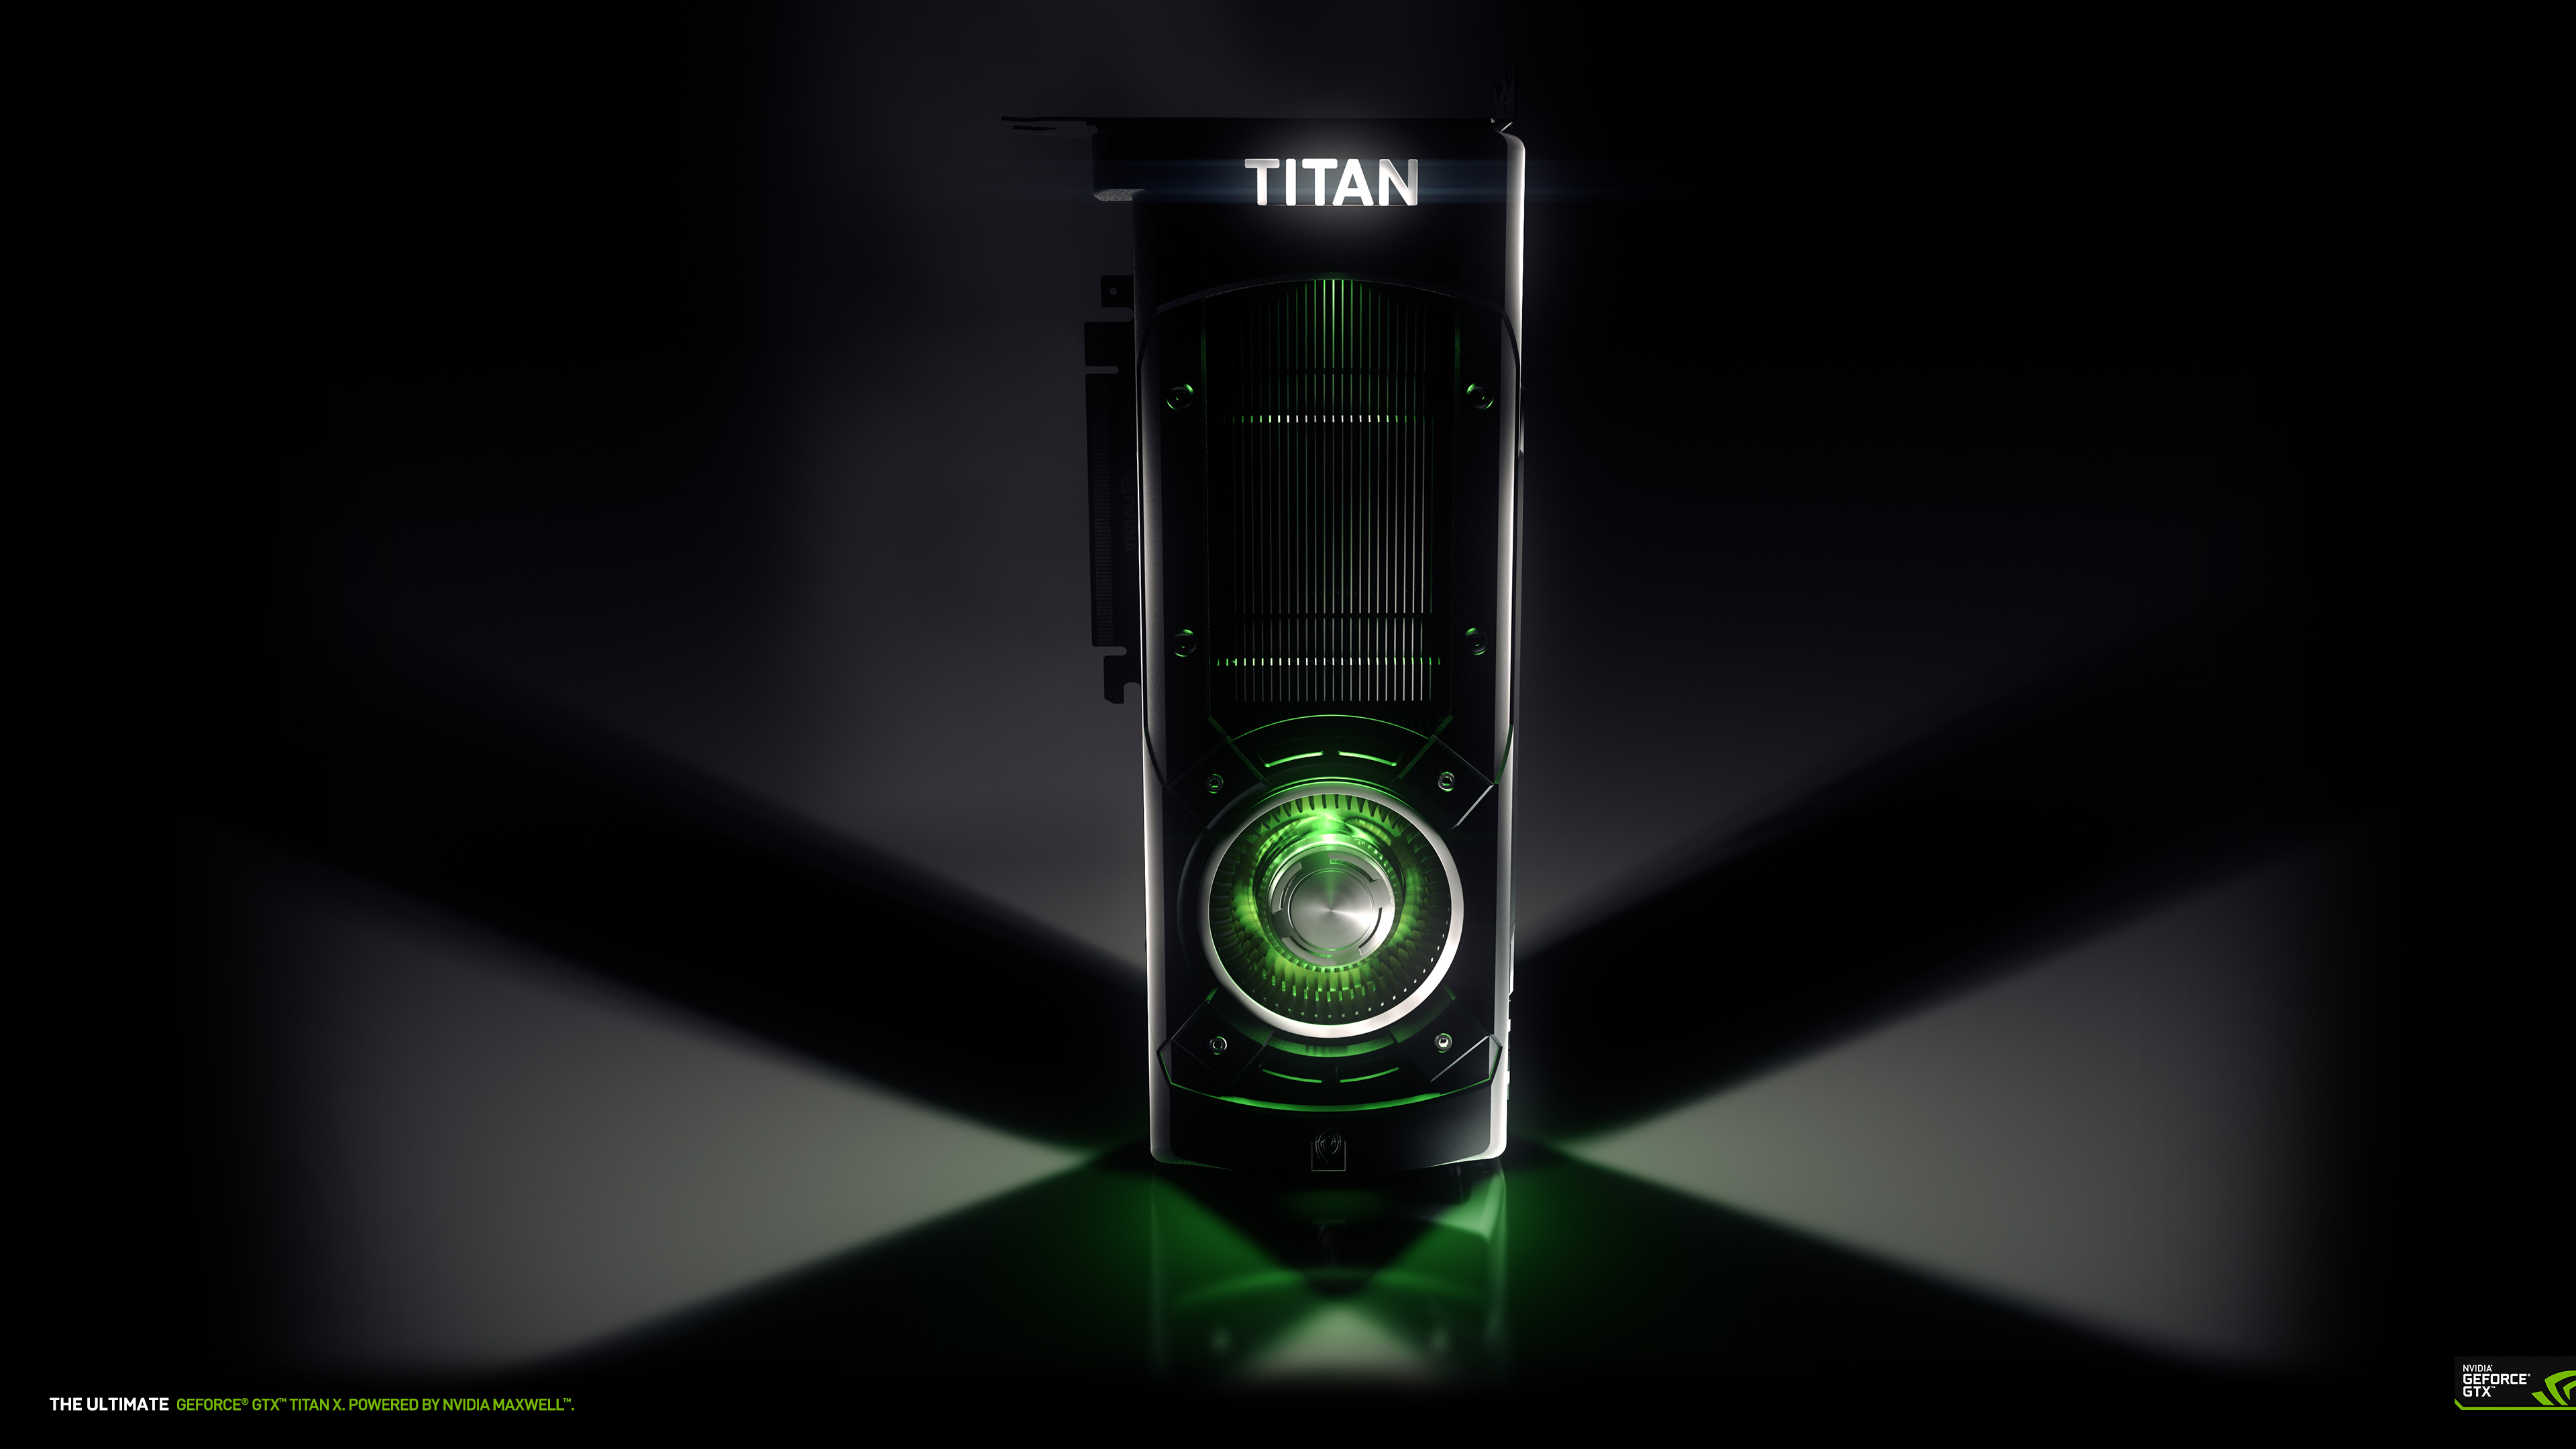 The Geforce Gtx Titan X Wallpaper